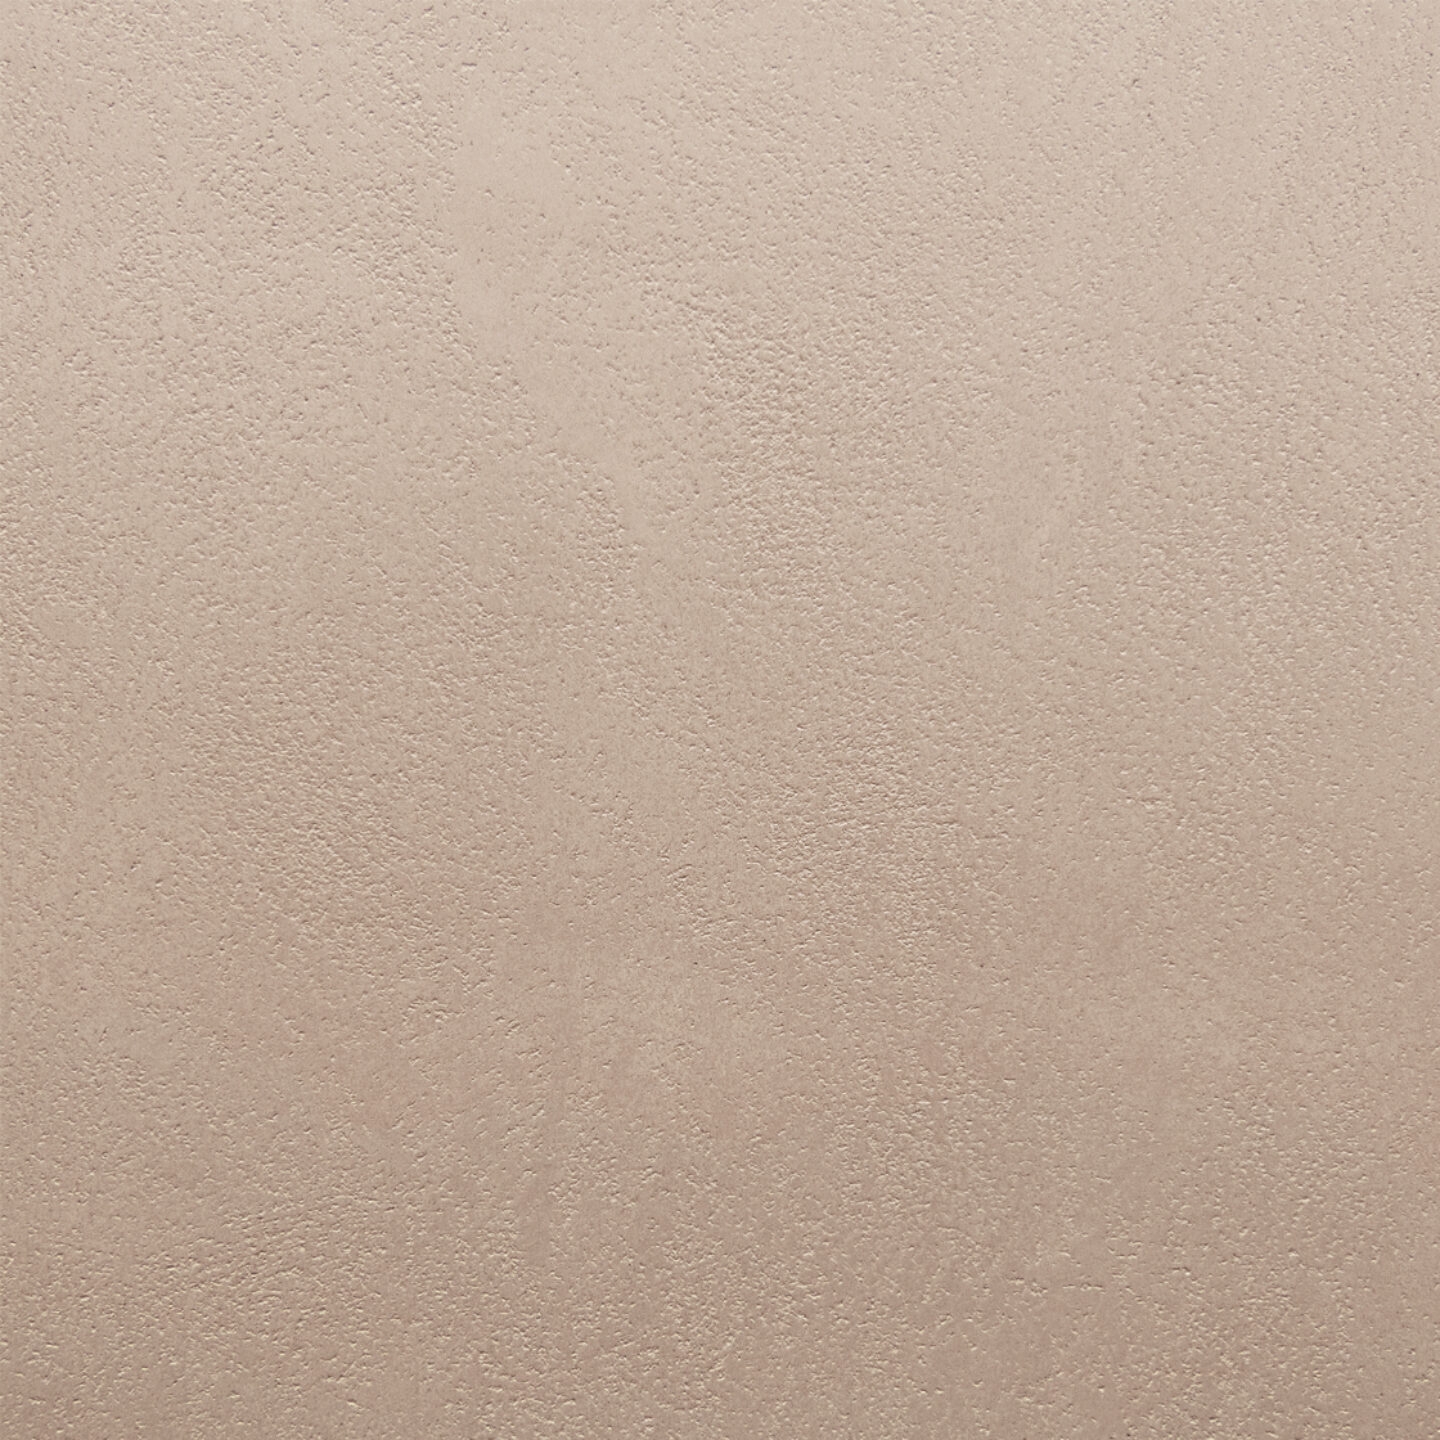 Close up of Armourcoat leatherstone exterior polished plaster finish - 58